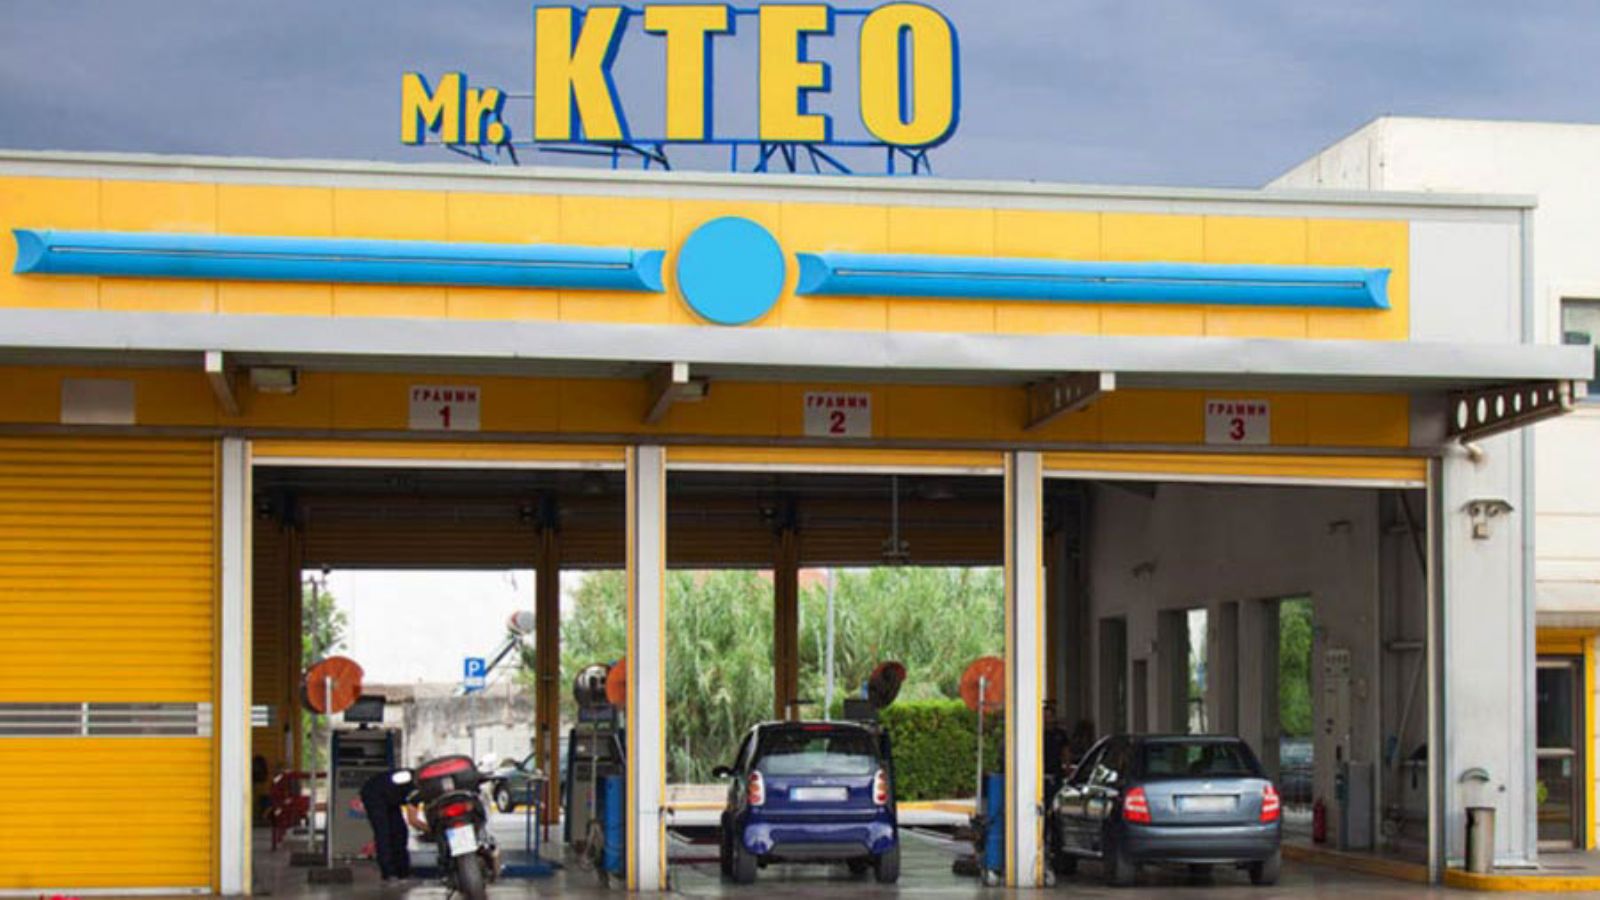 Mr. KTEO: Ο έλεγχος γίνεται απλή υπόθεση